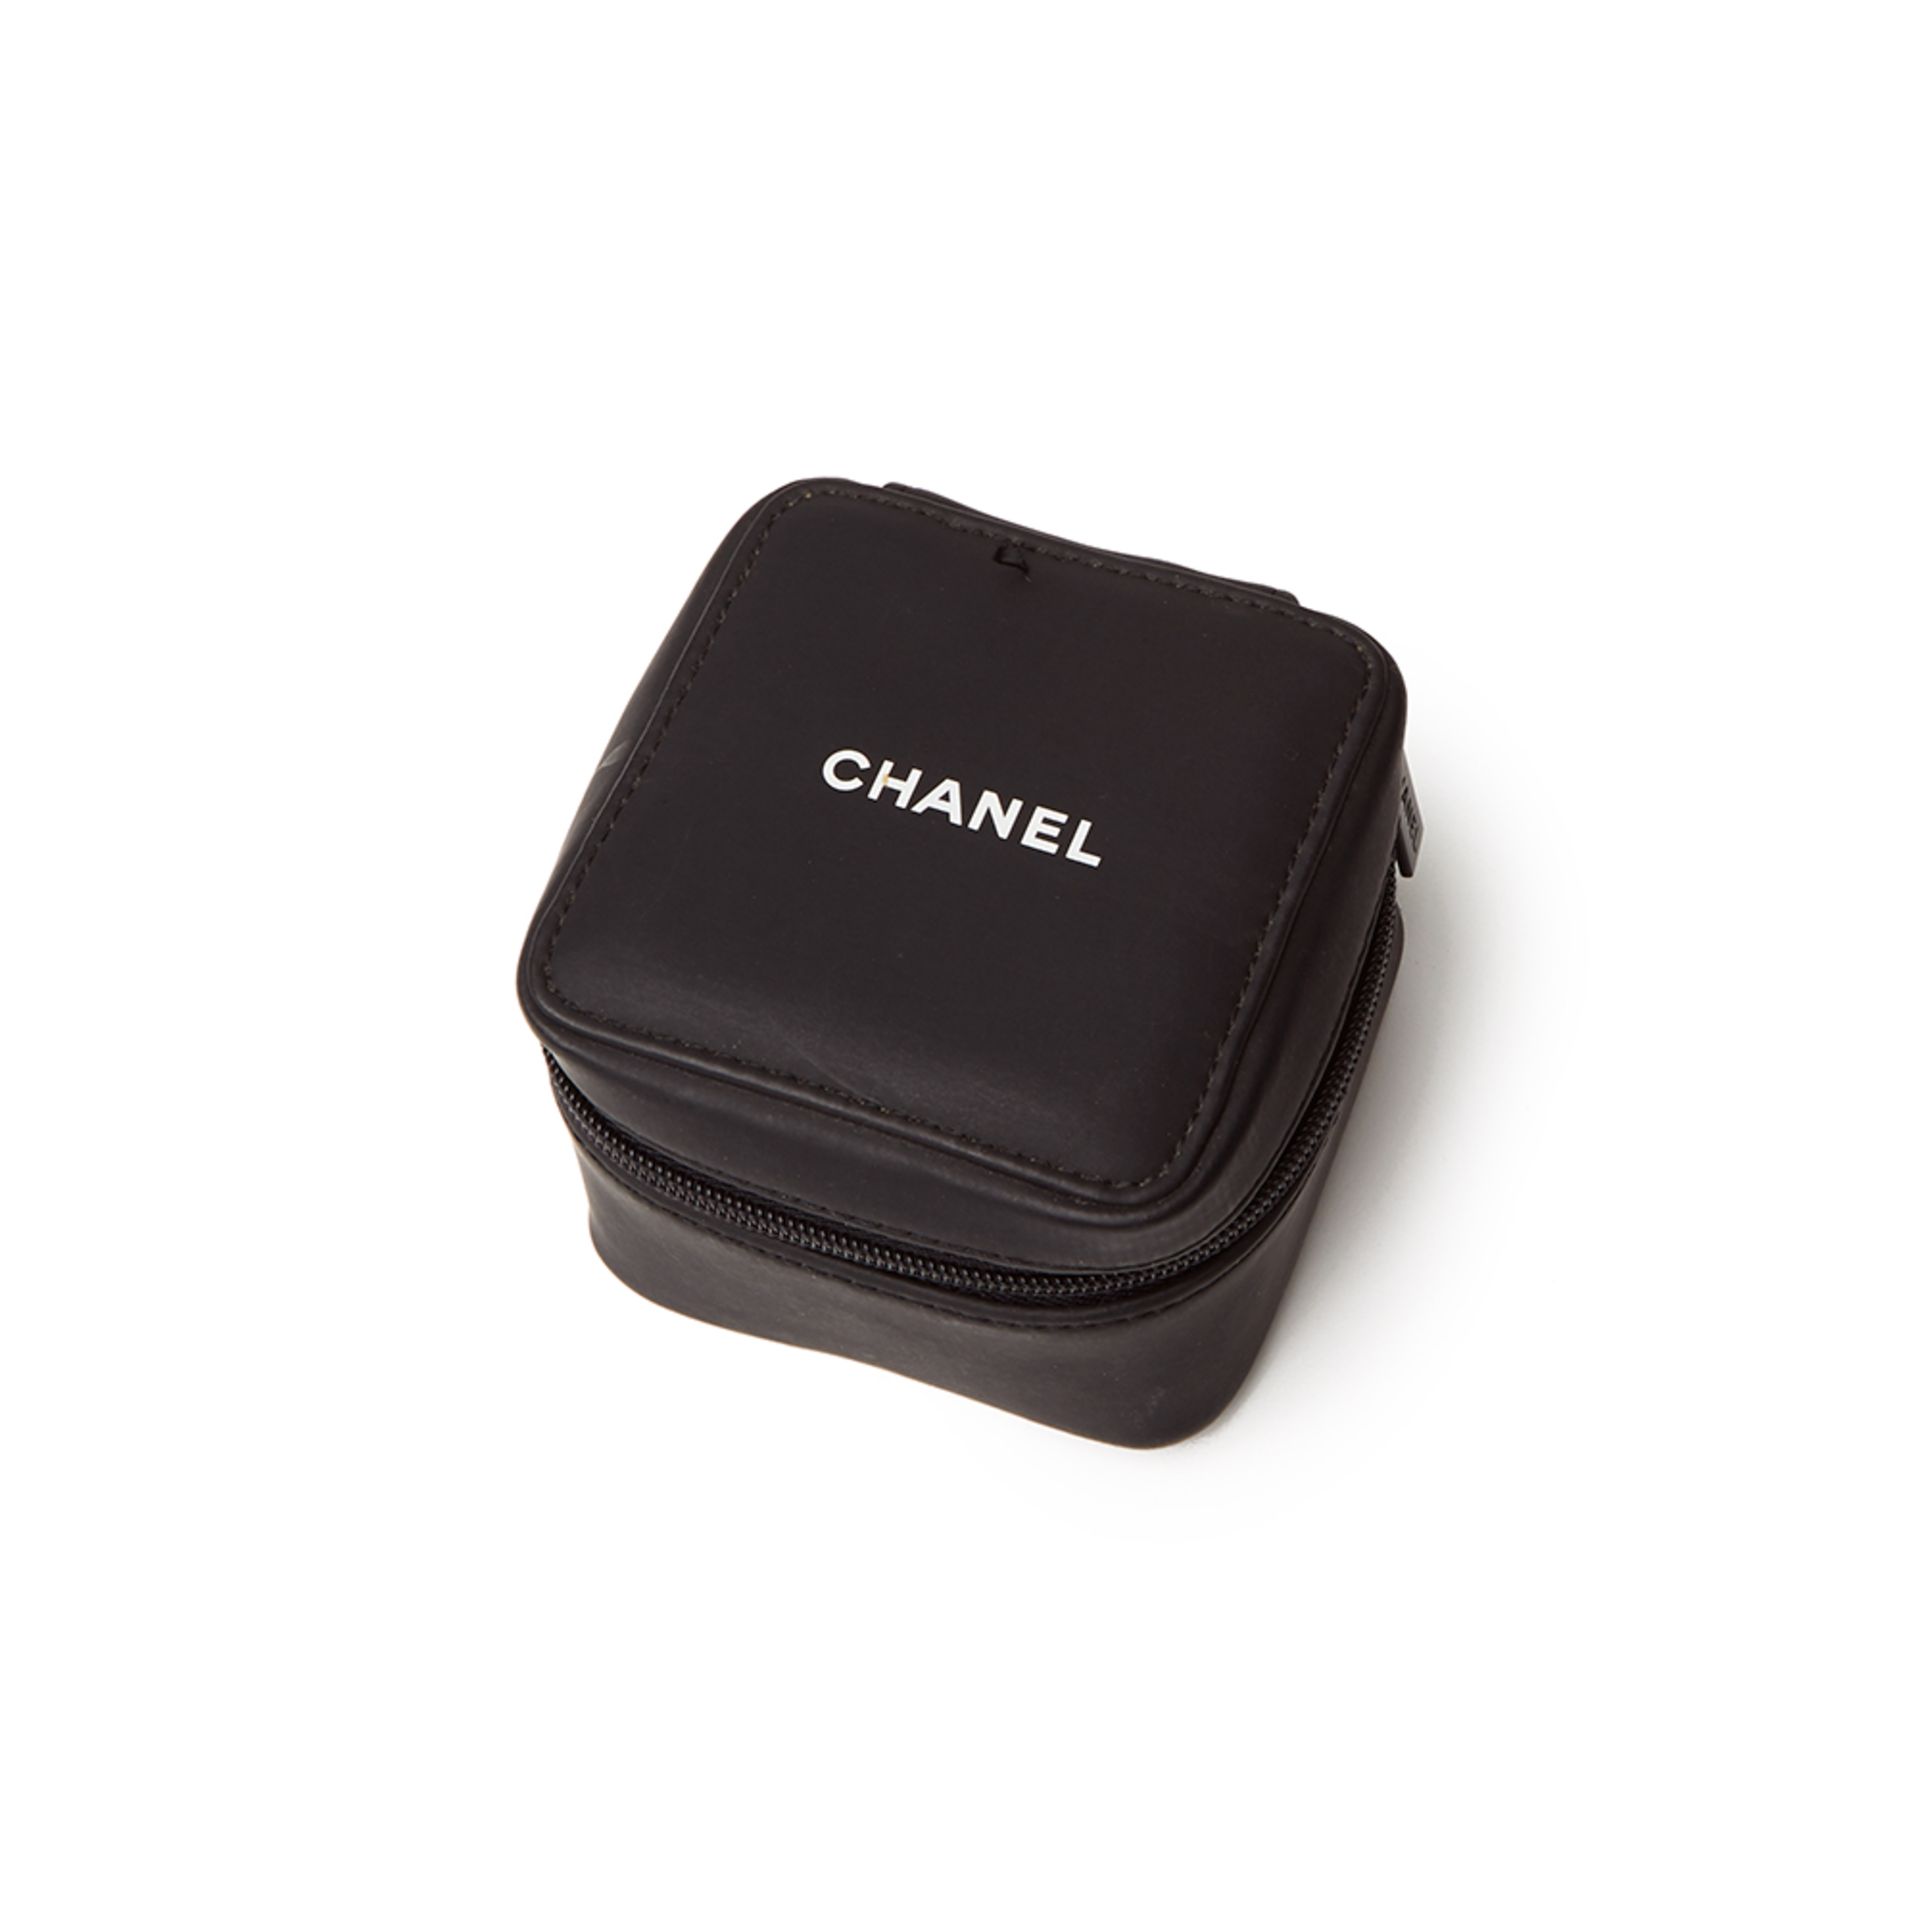 Chanel J12 Diamond Chronograph White Ceramic - H1007 - Image 8 of 8